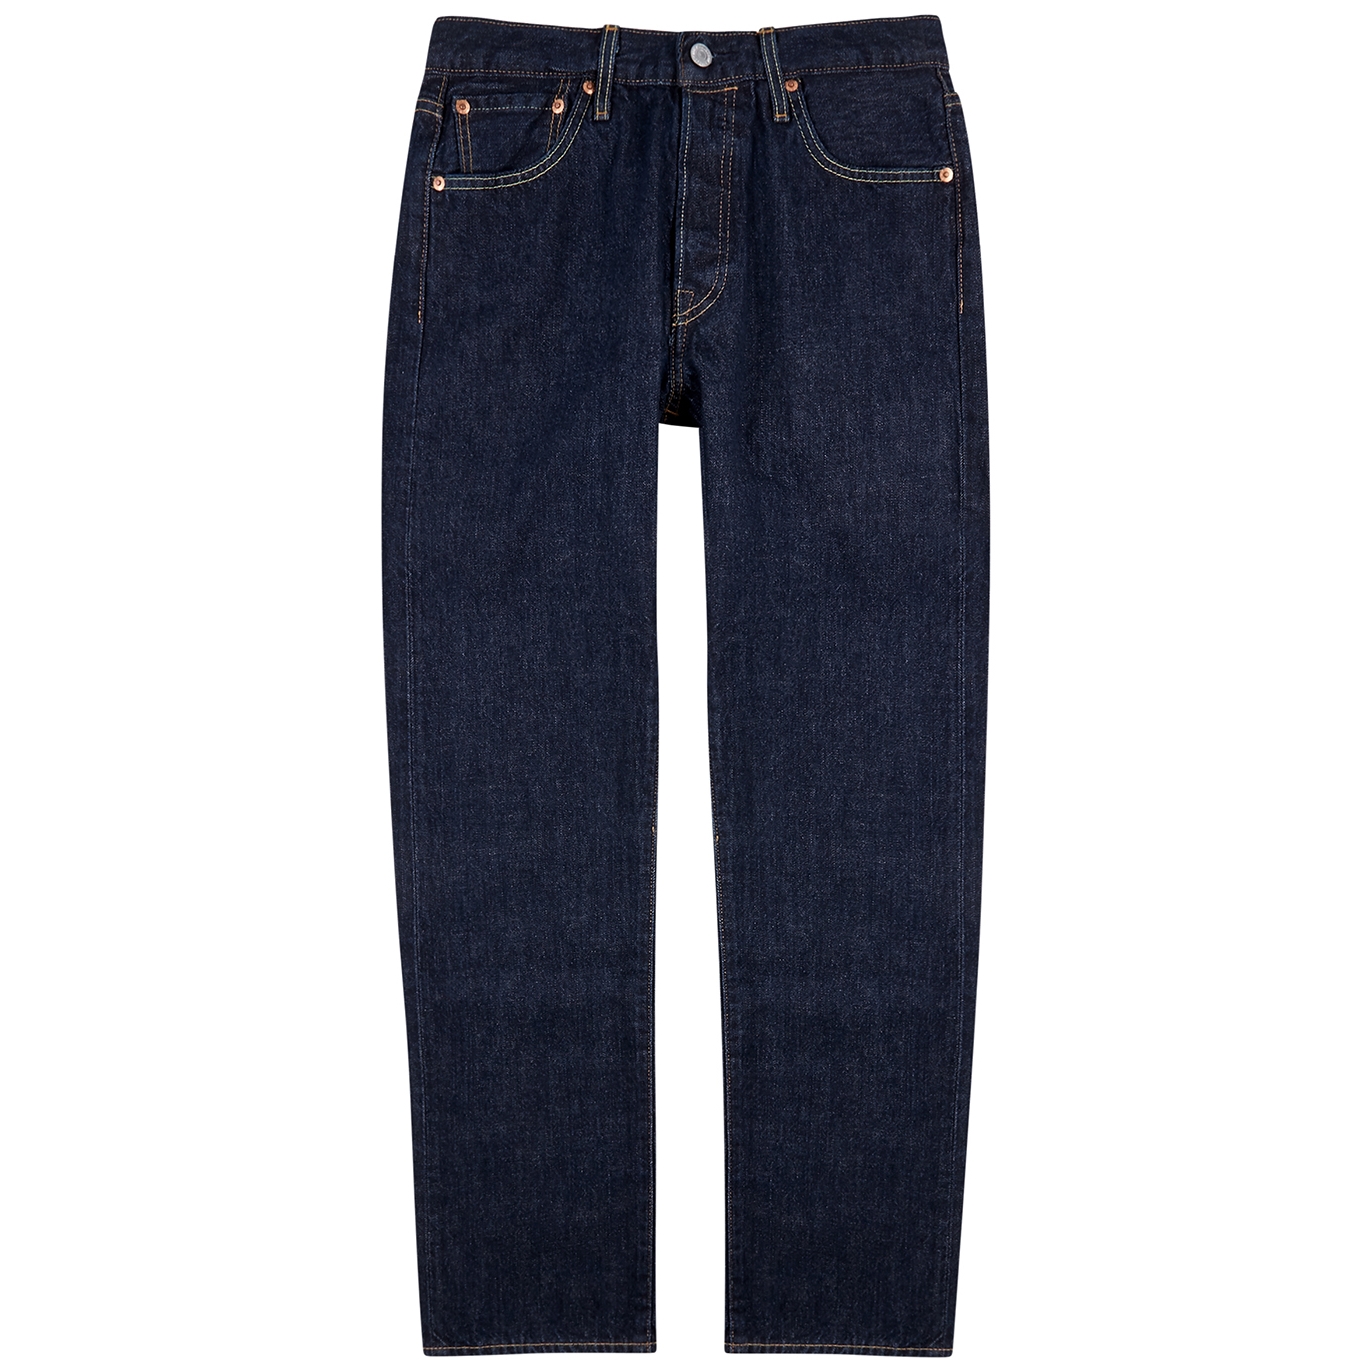 Levi's 501 Dark Blue Straight-leg Jeans - W28